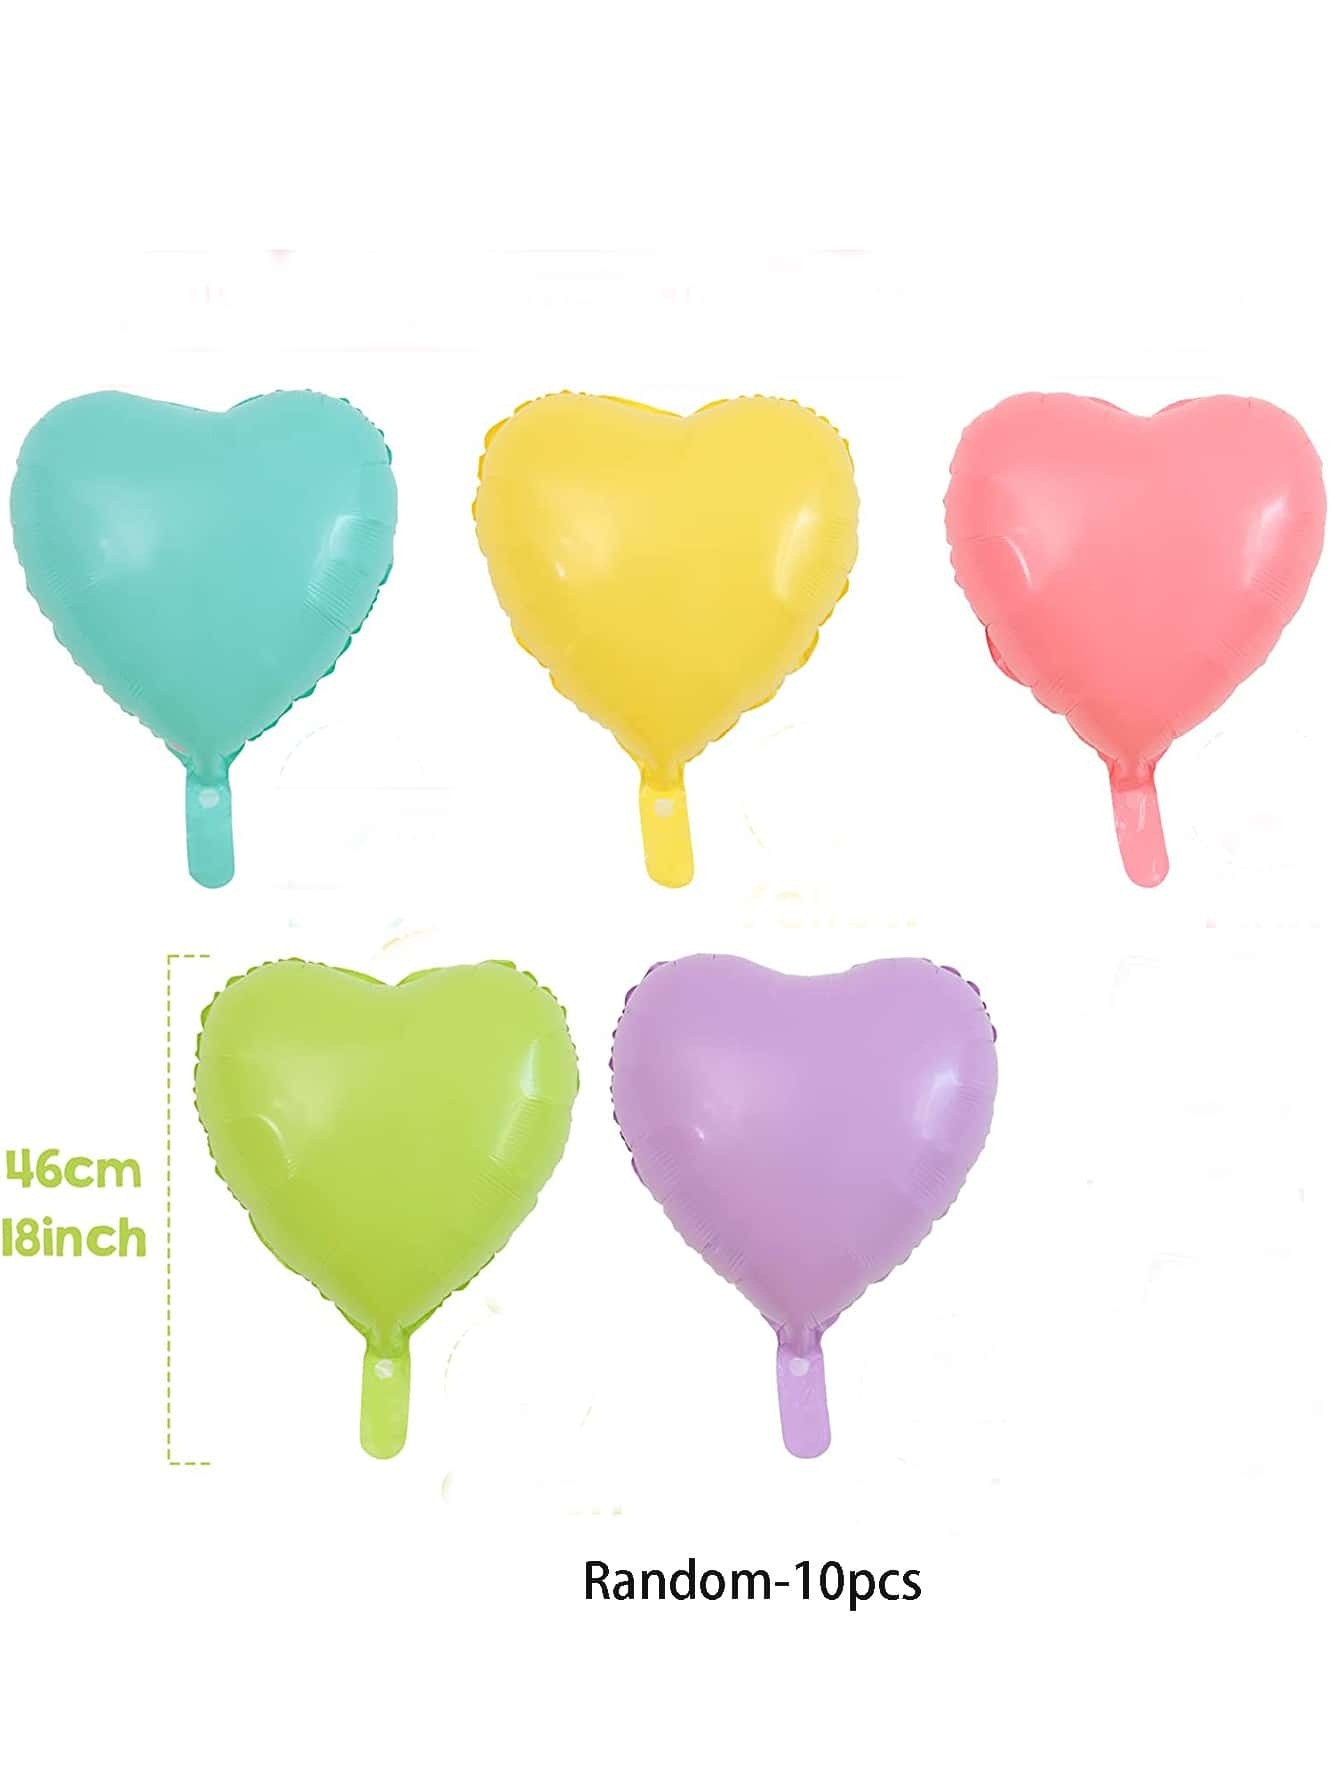 🔥Factory overstock - 10pcs 18inch Aluminum Balloon With 2pcs Balloon Accessories, Pastel Macaron Rainbow Heart Shaped Random Party Celebration Decoration Balloon